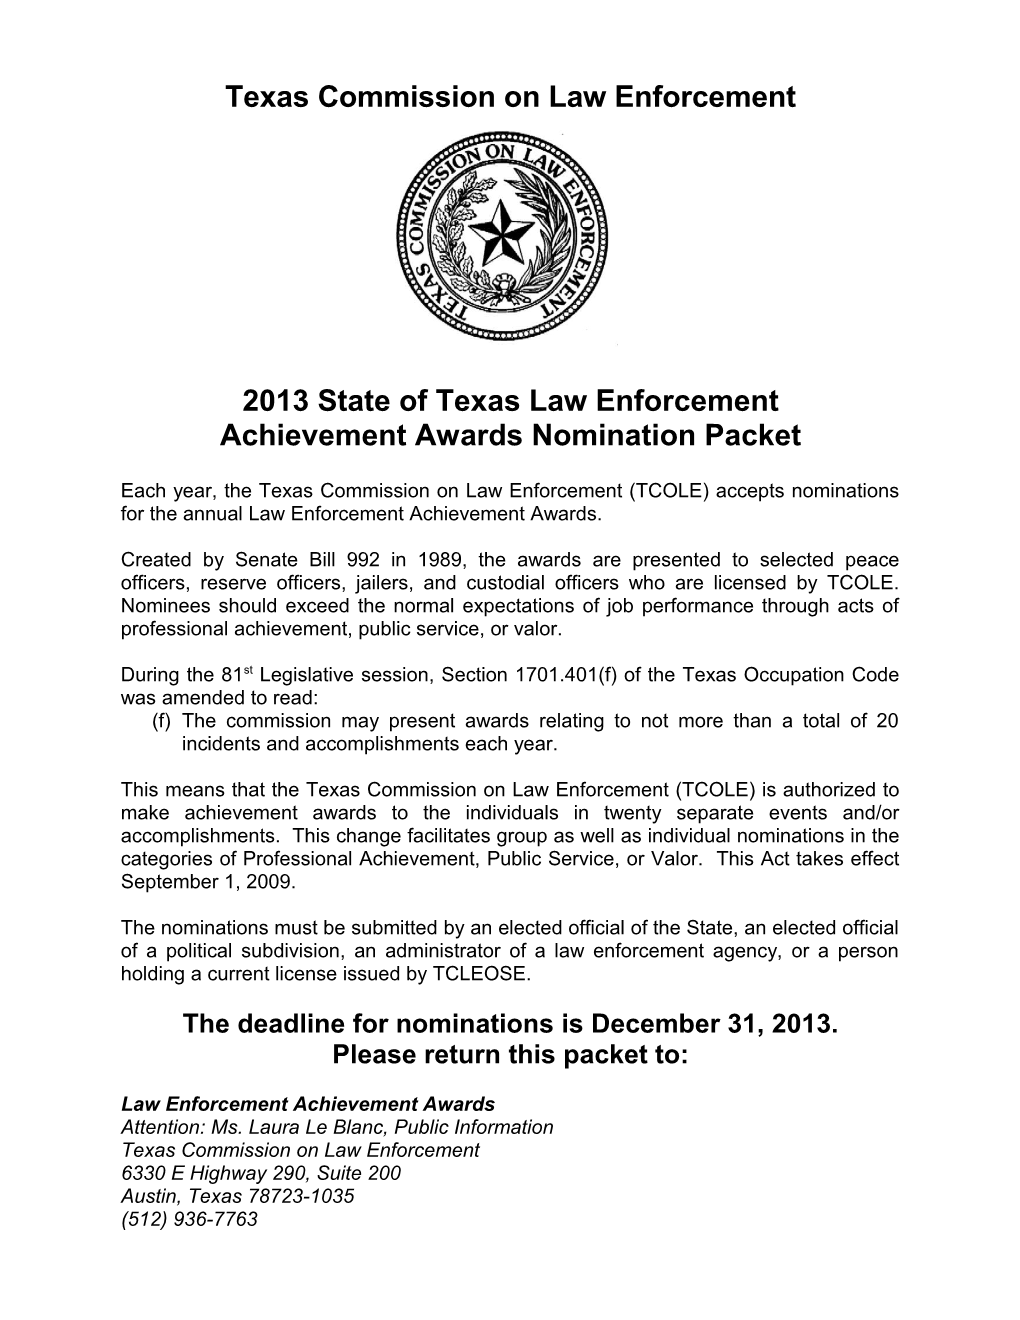 Texas Commission on Law Enforcement s1